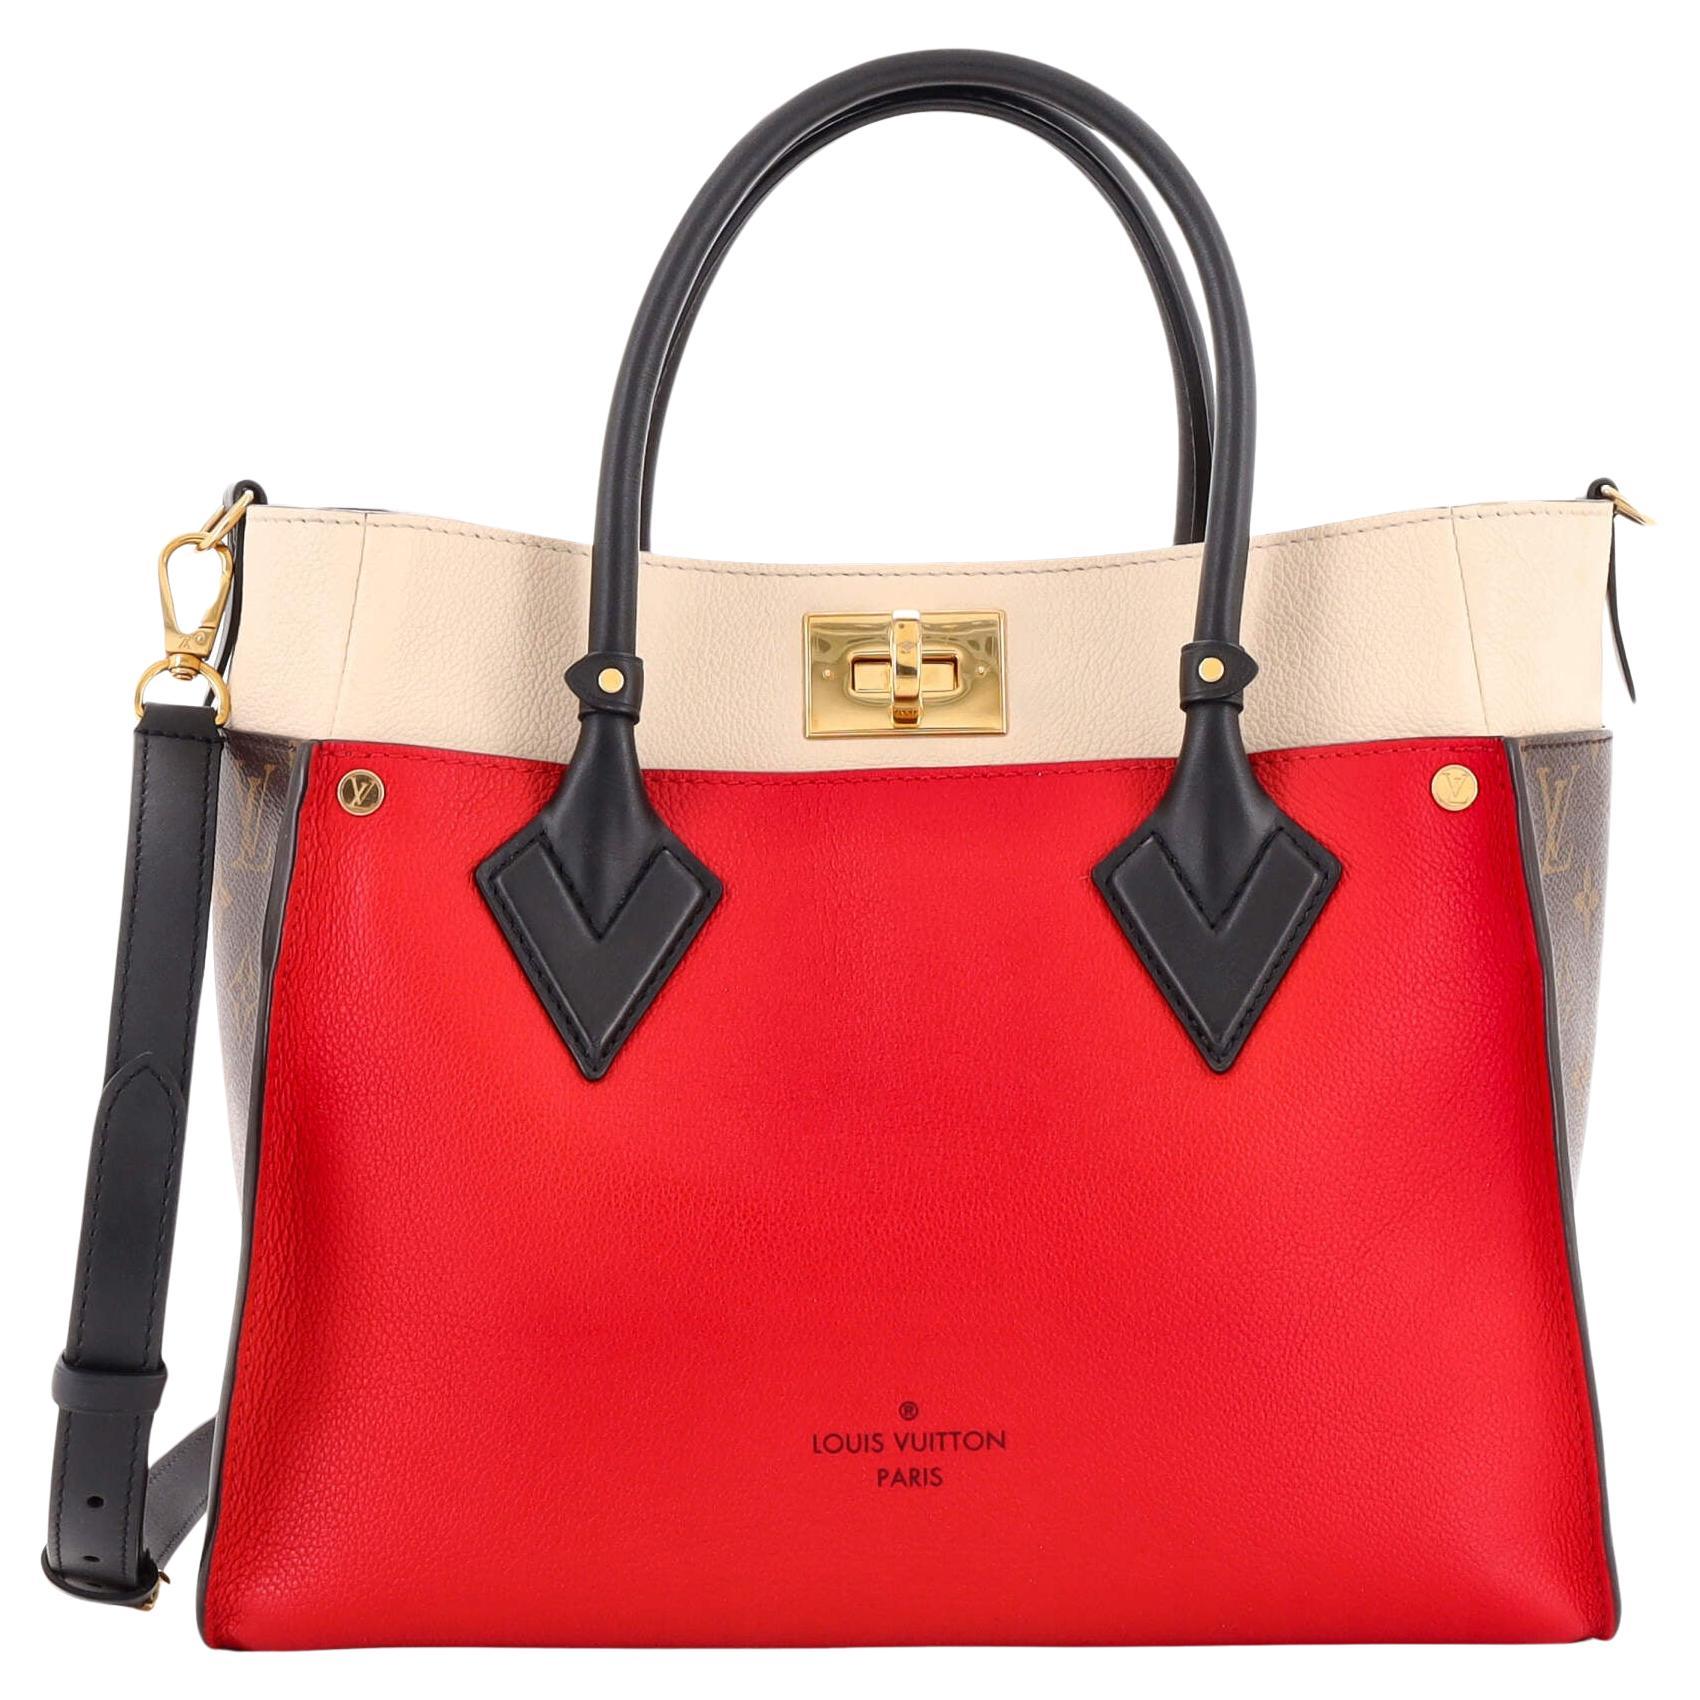 How Much Is a Louis Vuitton Bag - Top 4 FAQ Answered